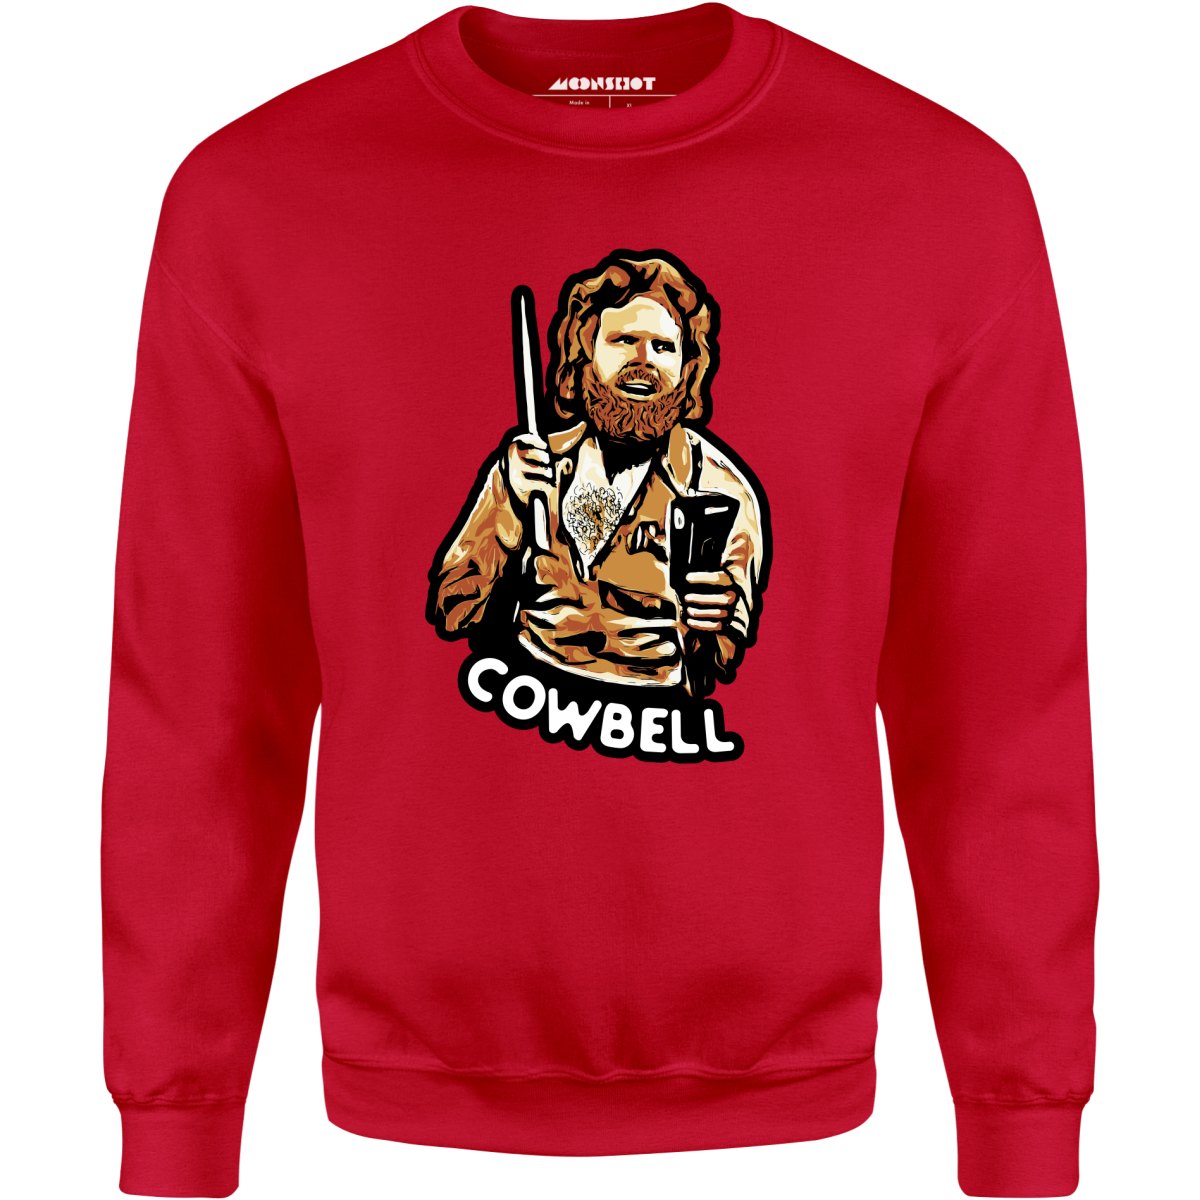 More Cowbell - Unisex Sweatshirt